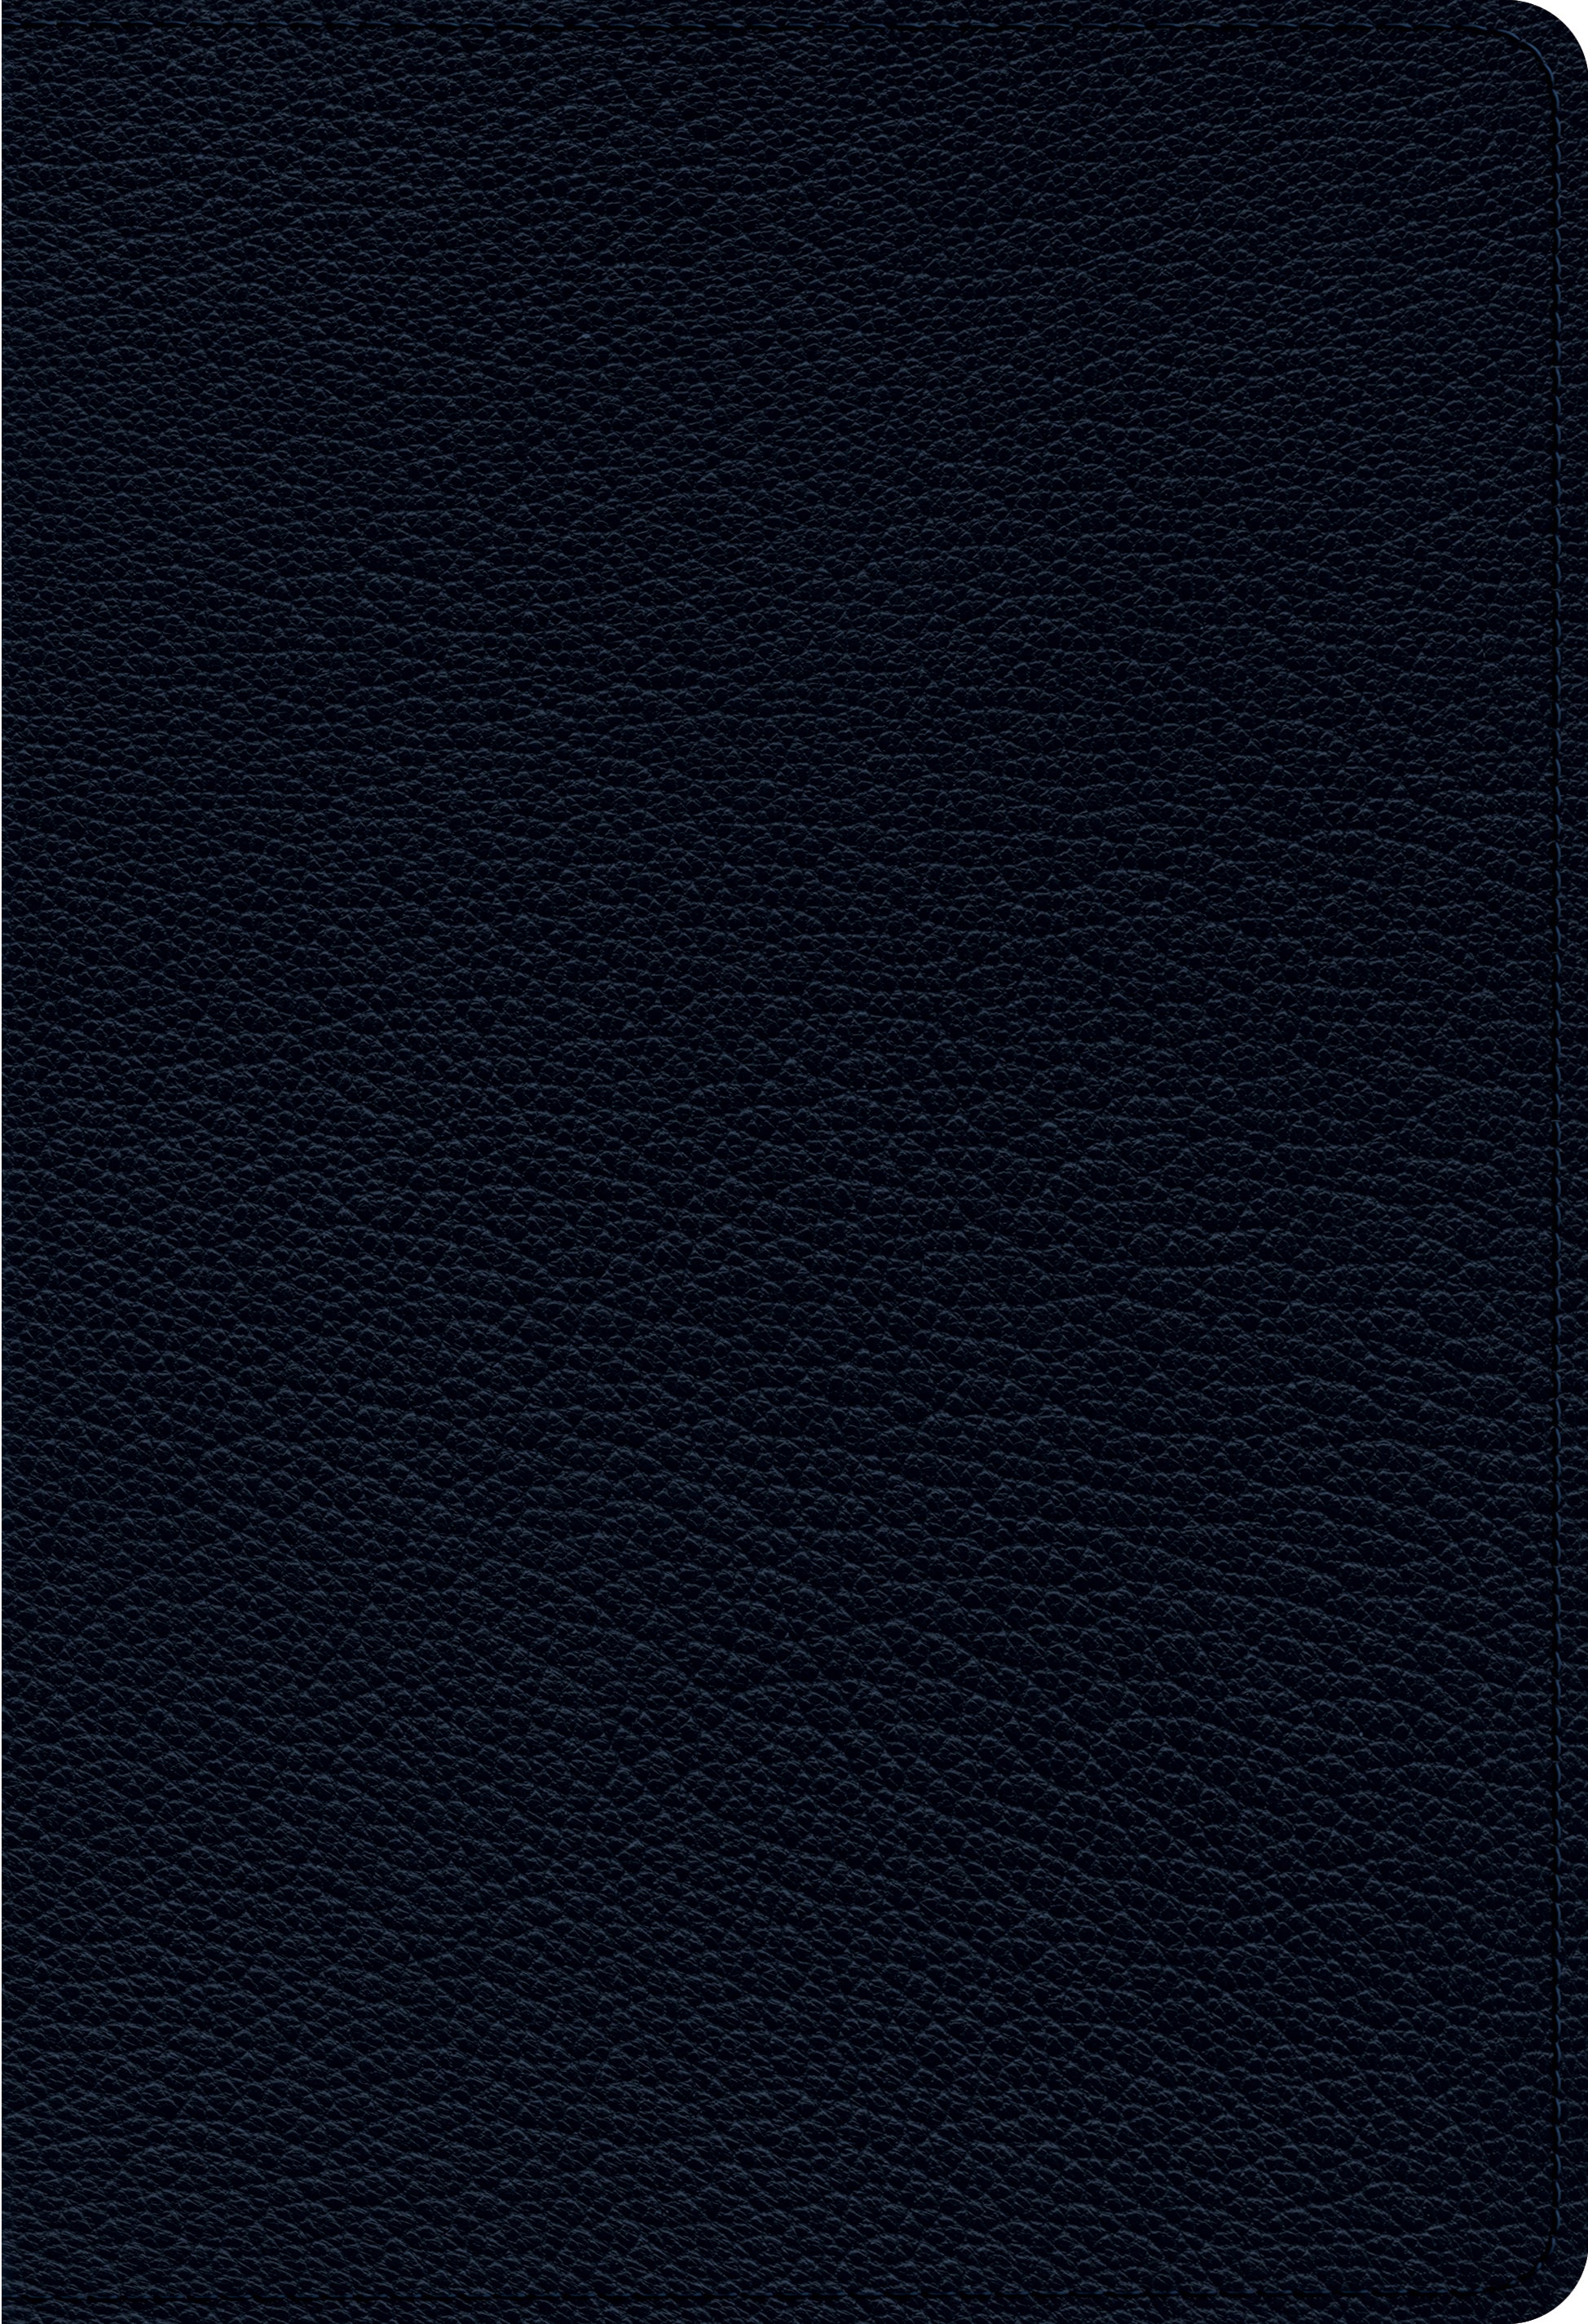 Image of ESV Heirloom Single Column Personal Size Bible (Goatskin, Dark Blue) other